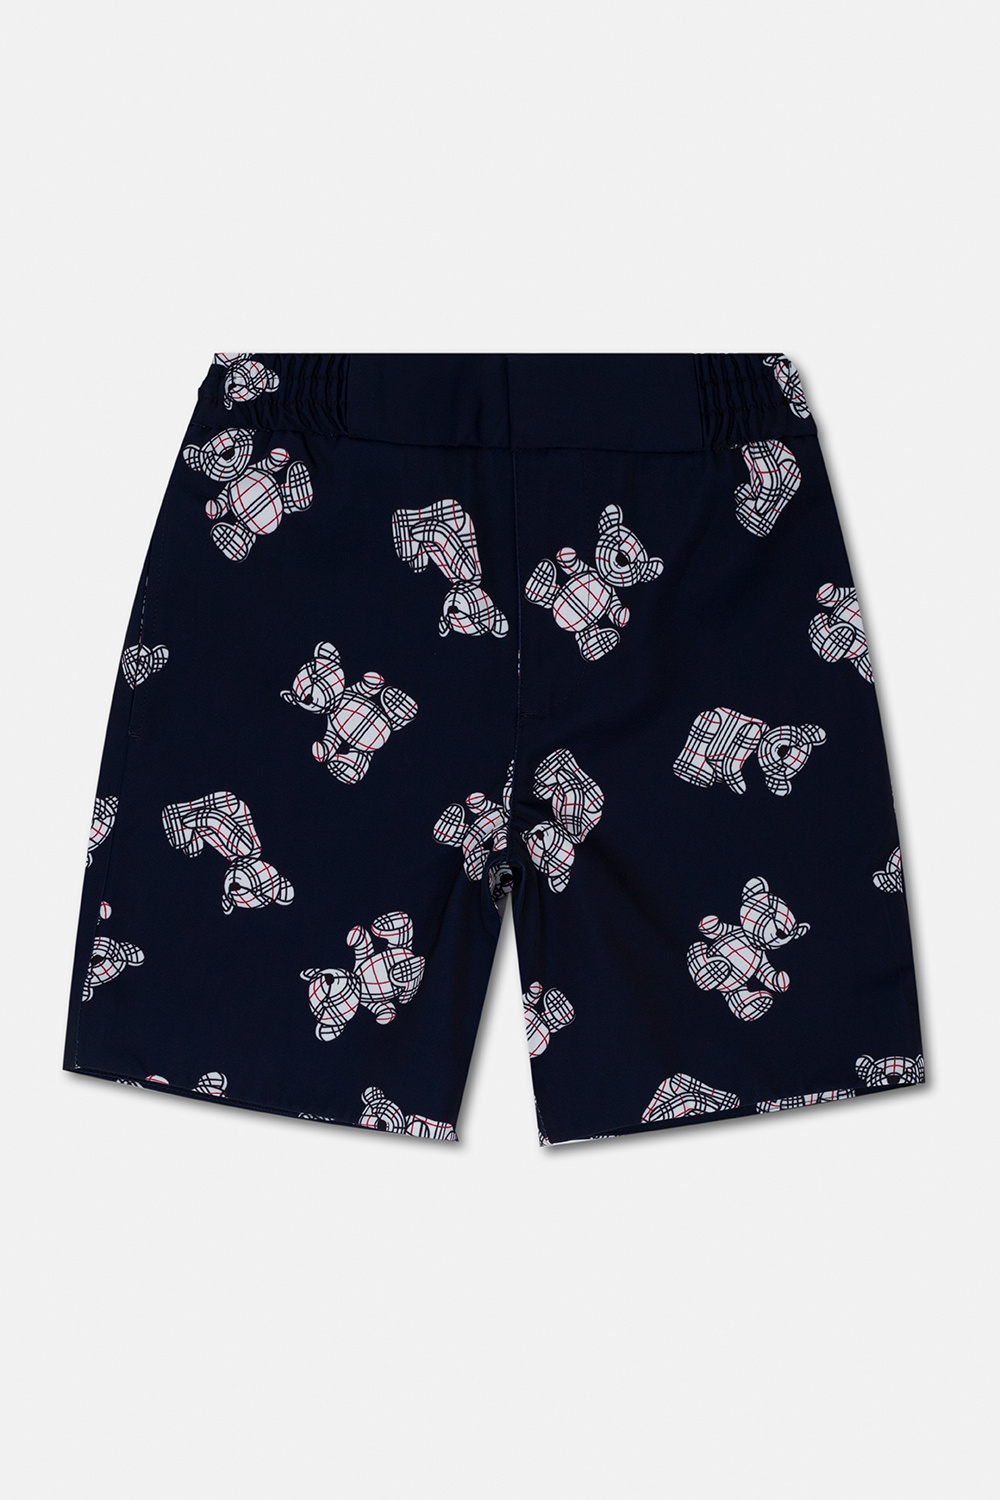 burberry Check Kids ‘Leonard’ printed shorts